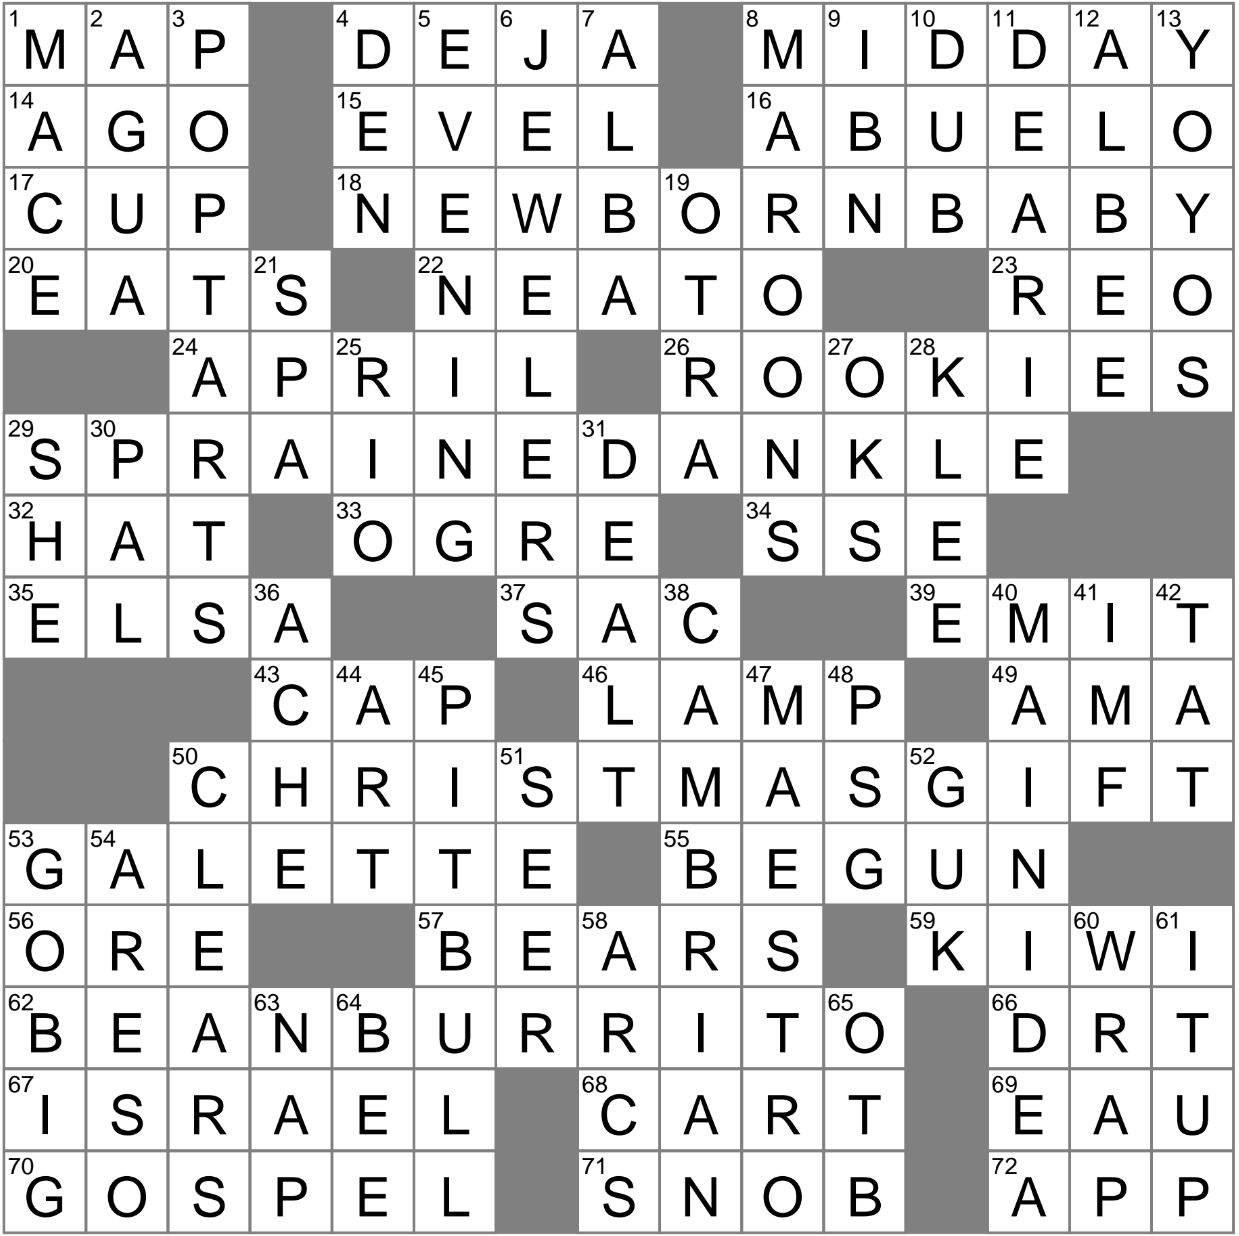 LA Times Crossword 4 Jan 23 Wednesday Knowledge and brain activity